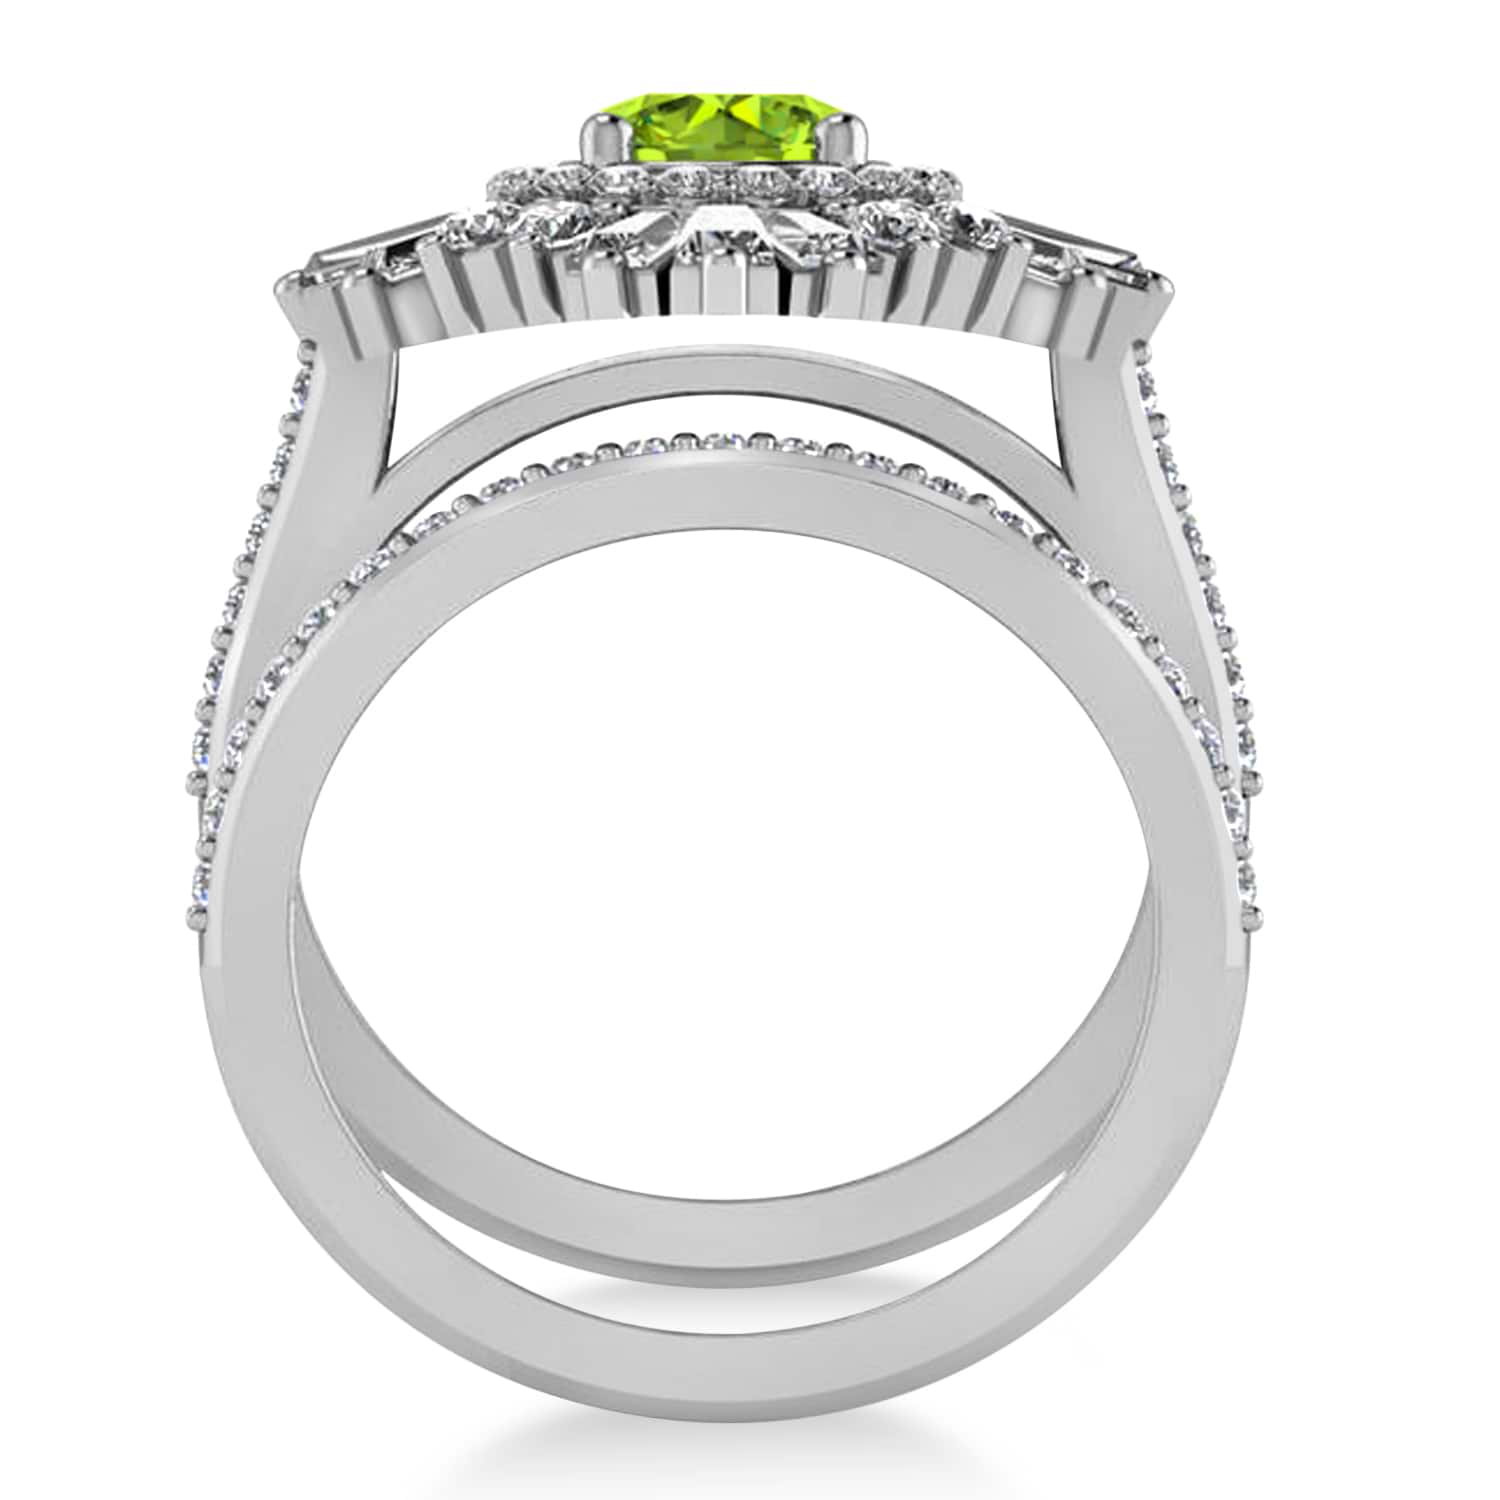 Peridot & Diamond Ballerina Engagement Ring 14k White Gold (2.74 ctw)